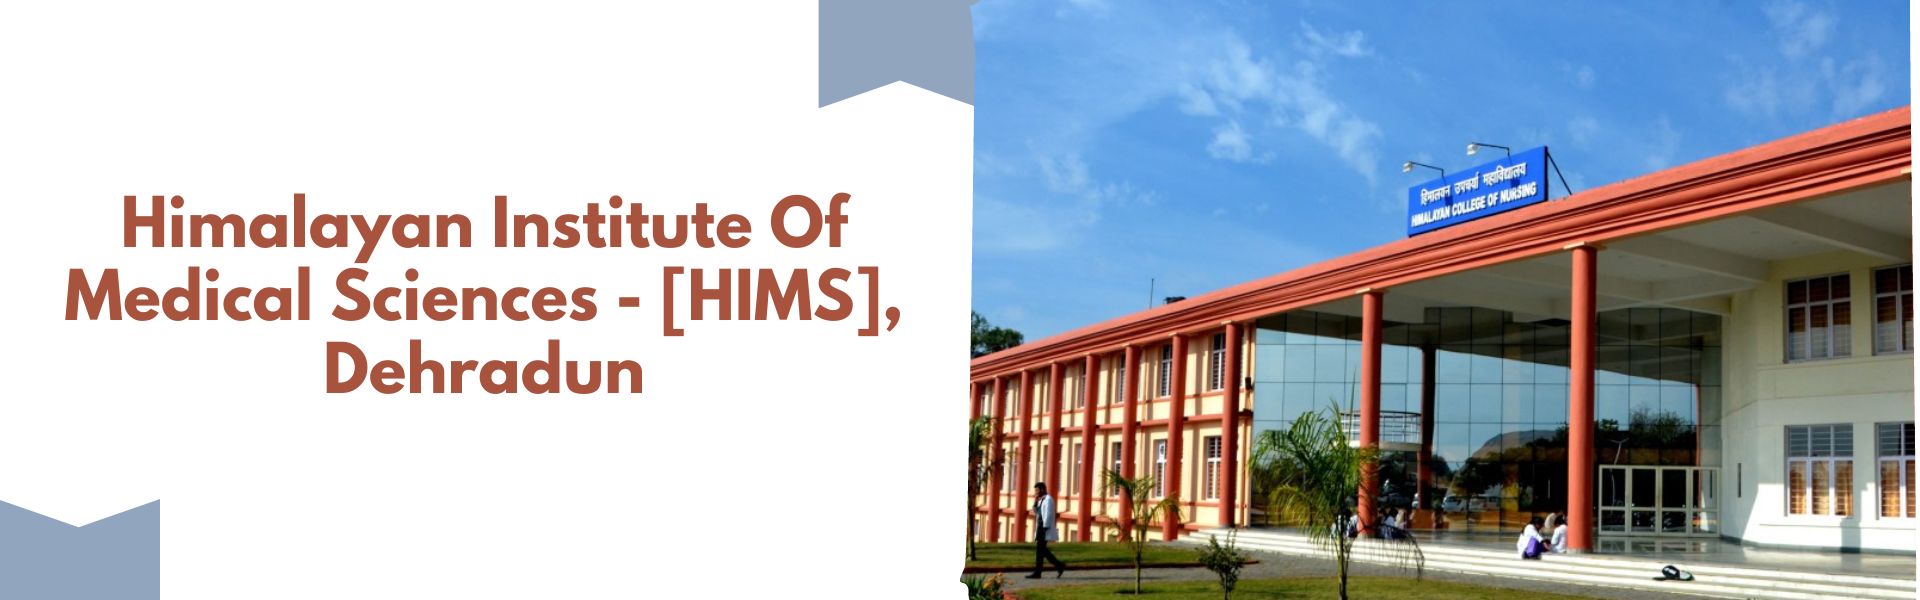 Himalayan Institute Of Medical Sciences - [HIMS], Dehradun